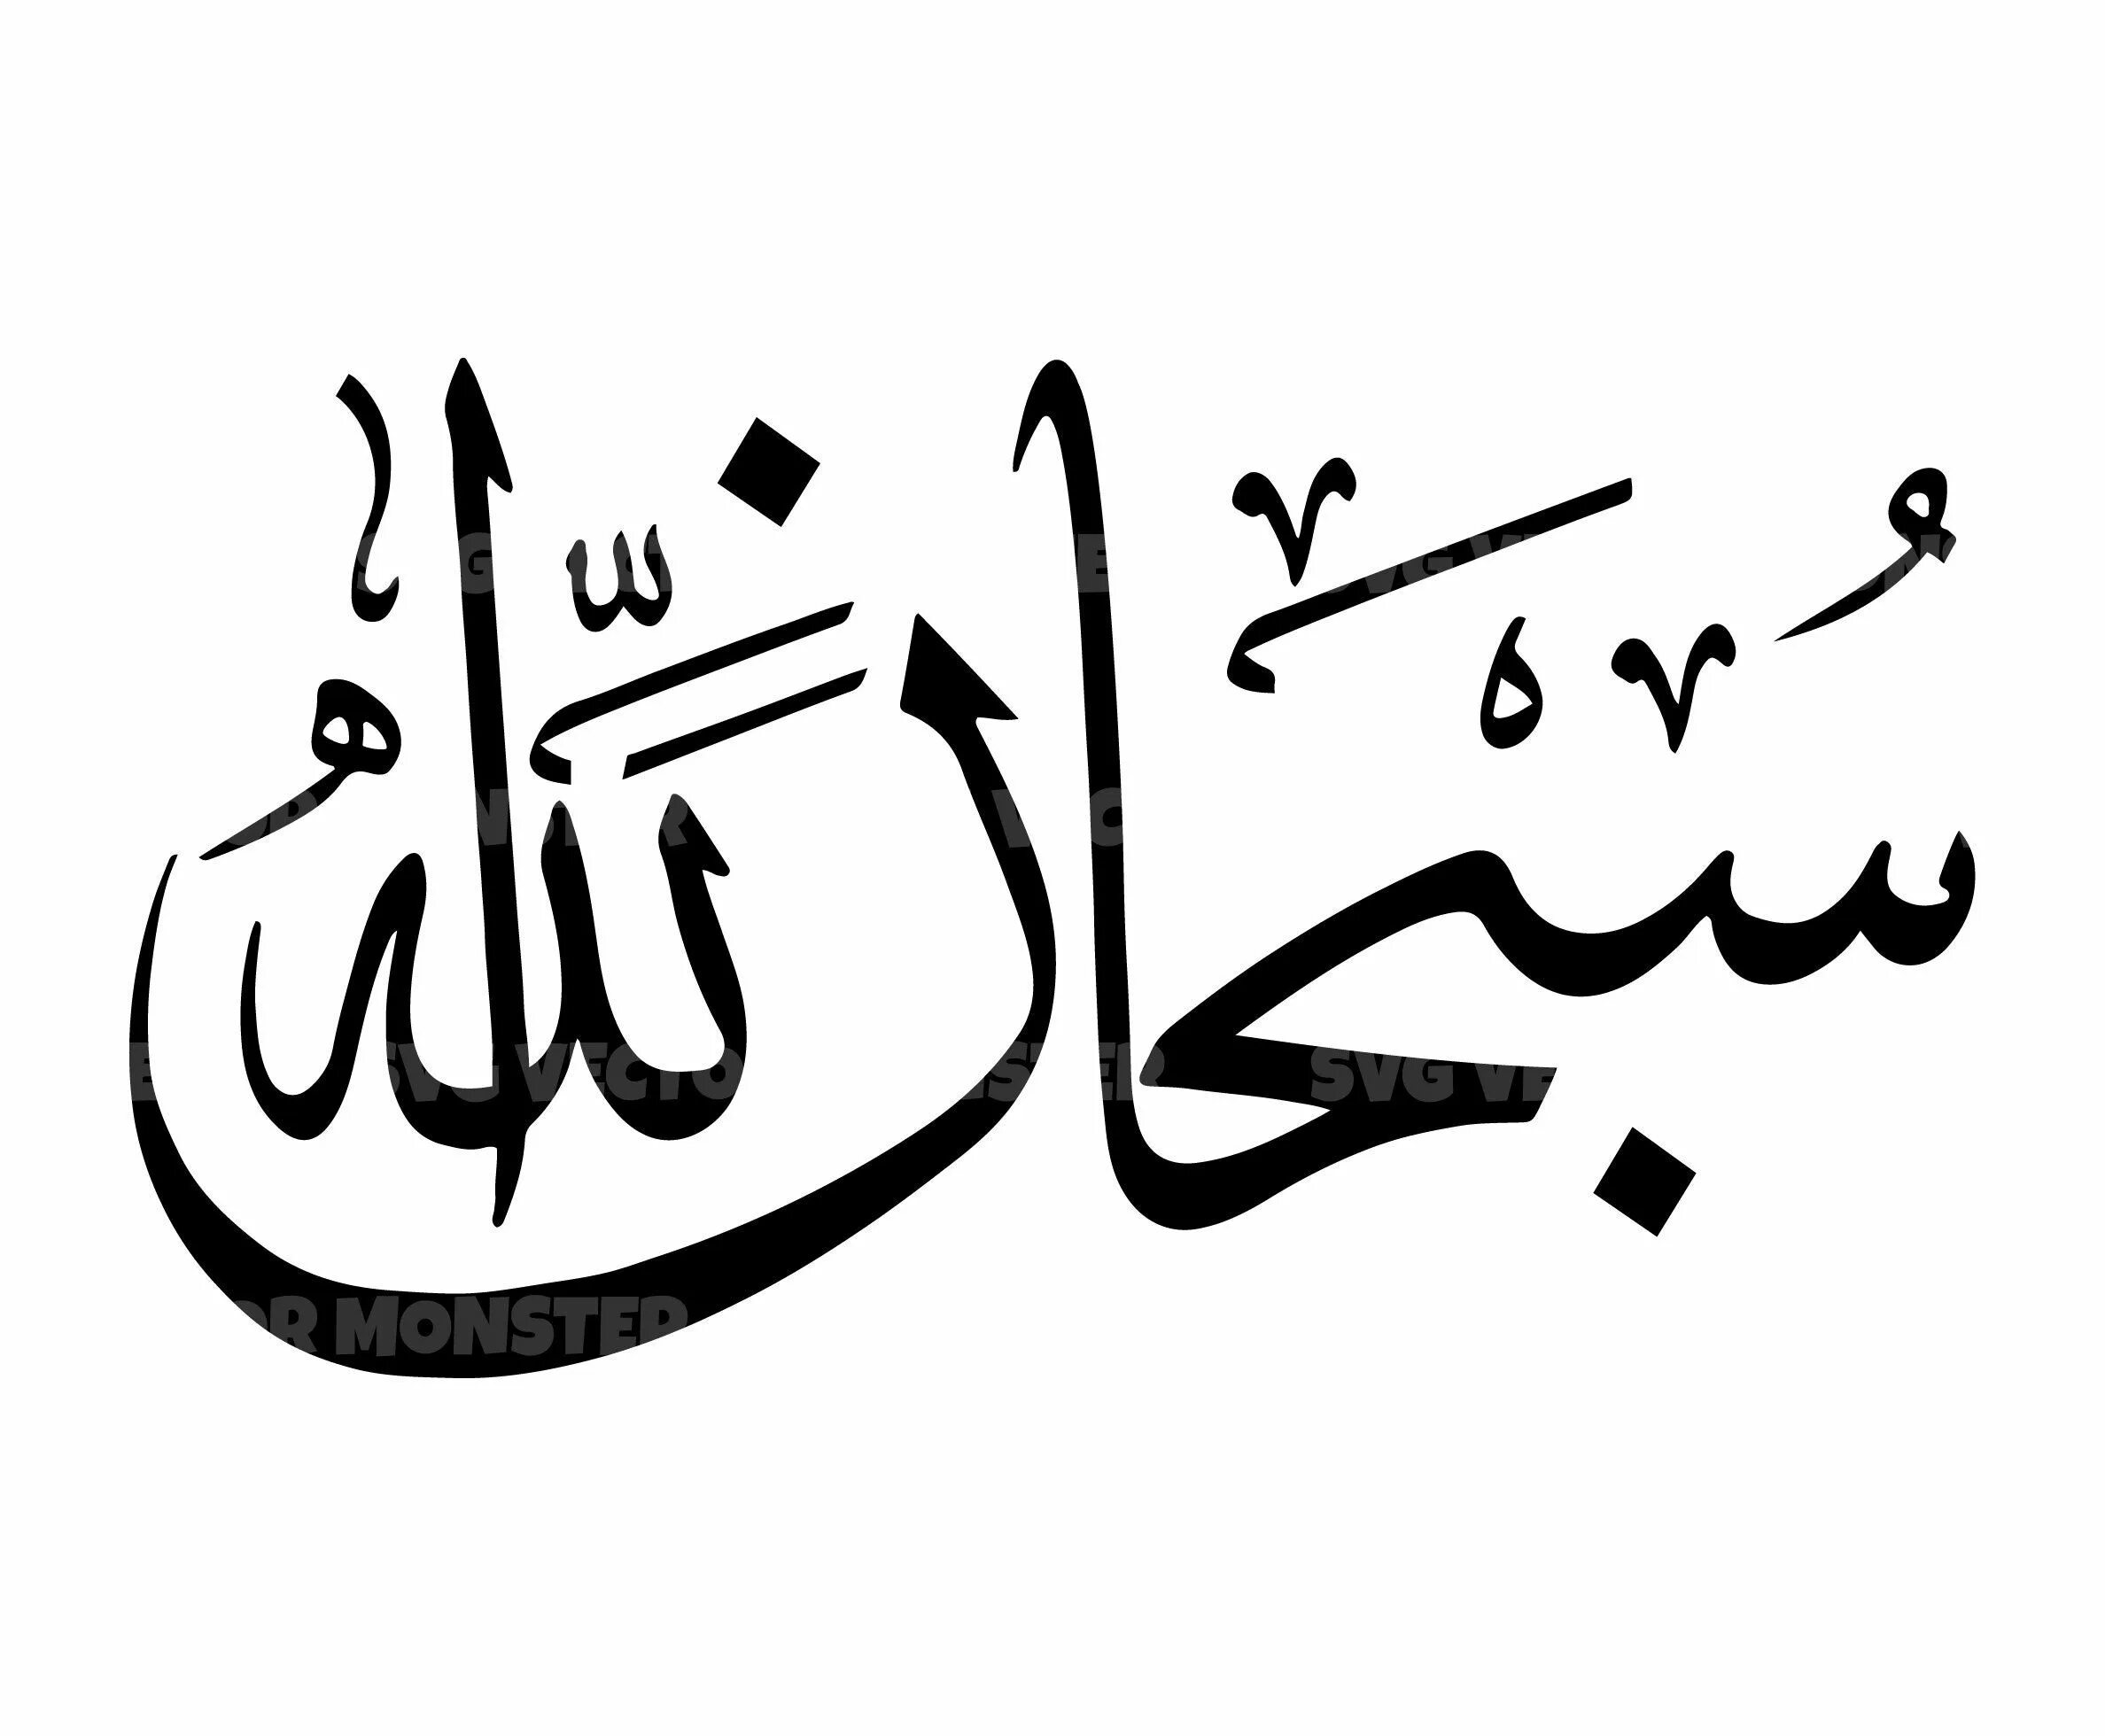 Слава на арабском. СУБХАНАЛЛАХ на арабском каллиграфия. Исламская каллиграфия МАШААЛЛАХ. Исламская каллиграфия Бисмилла. Арабские надписи.